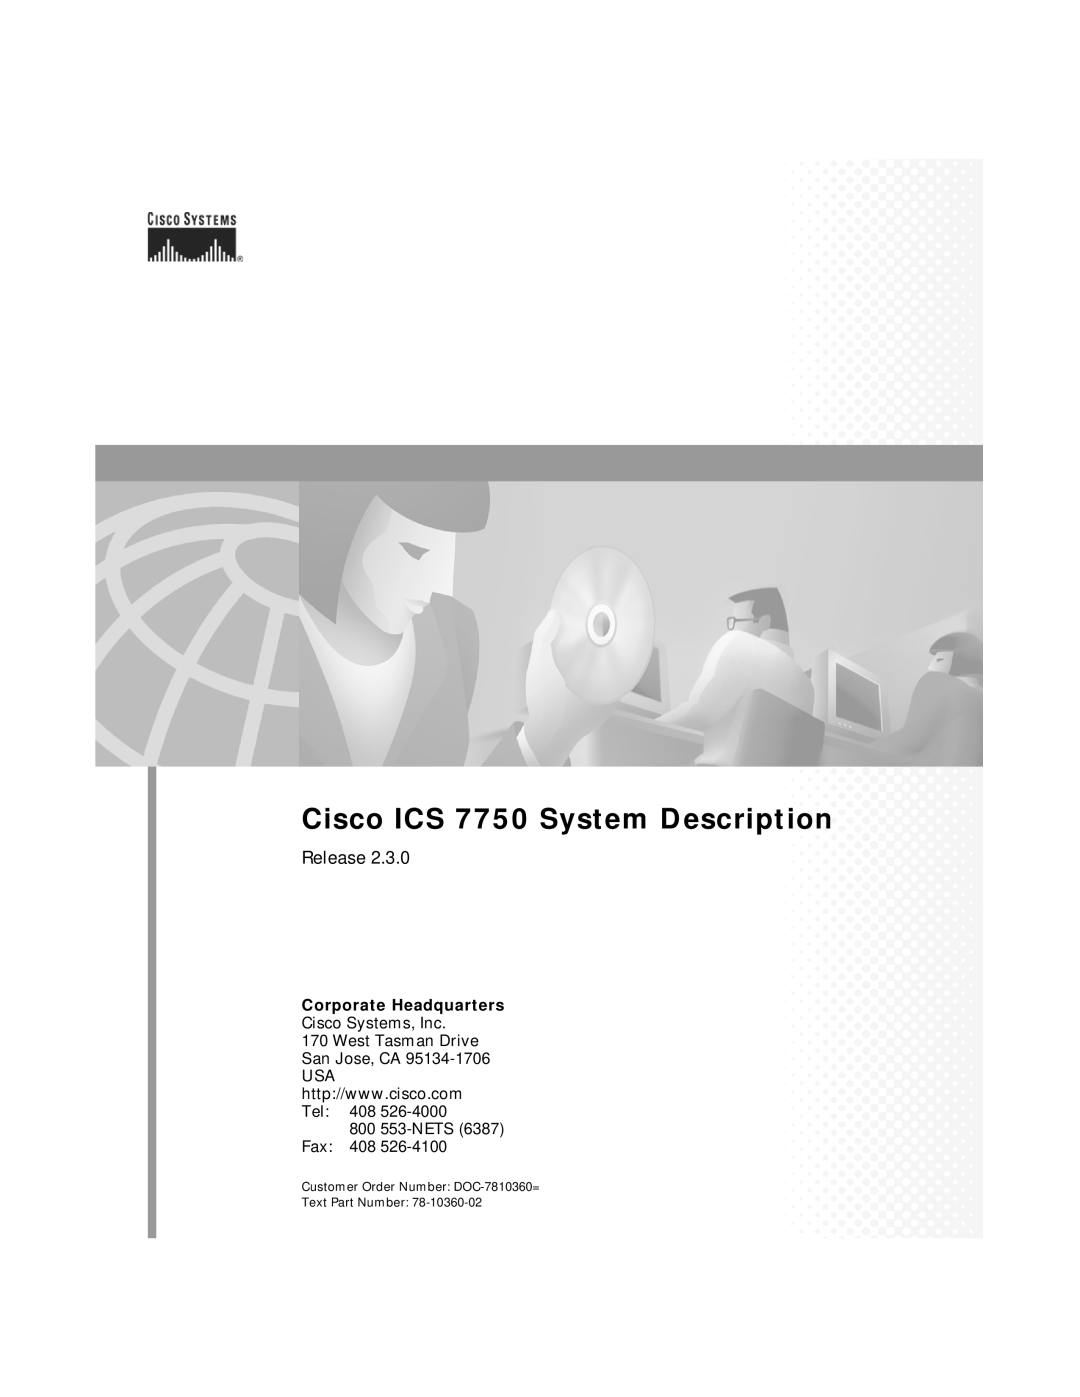 Cisco Systems ICS-7750 manual Cisco ICS 7750 System Description, Release, Corporate Headquarters 